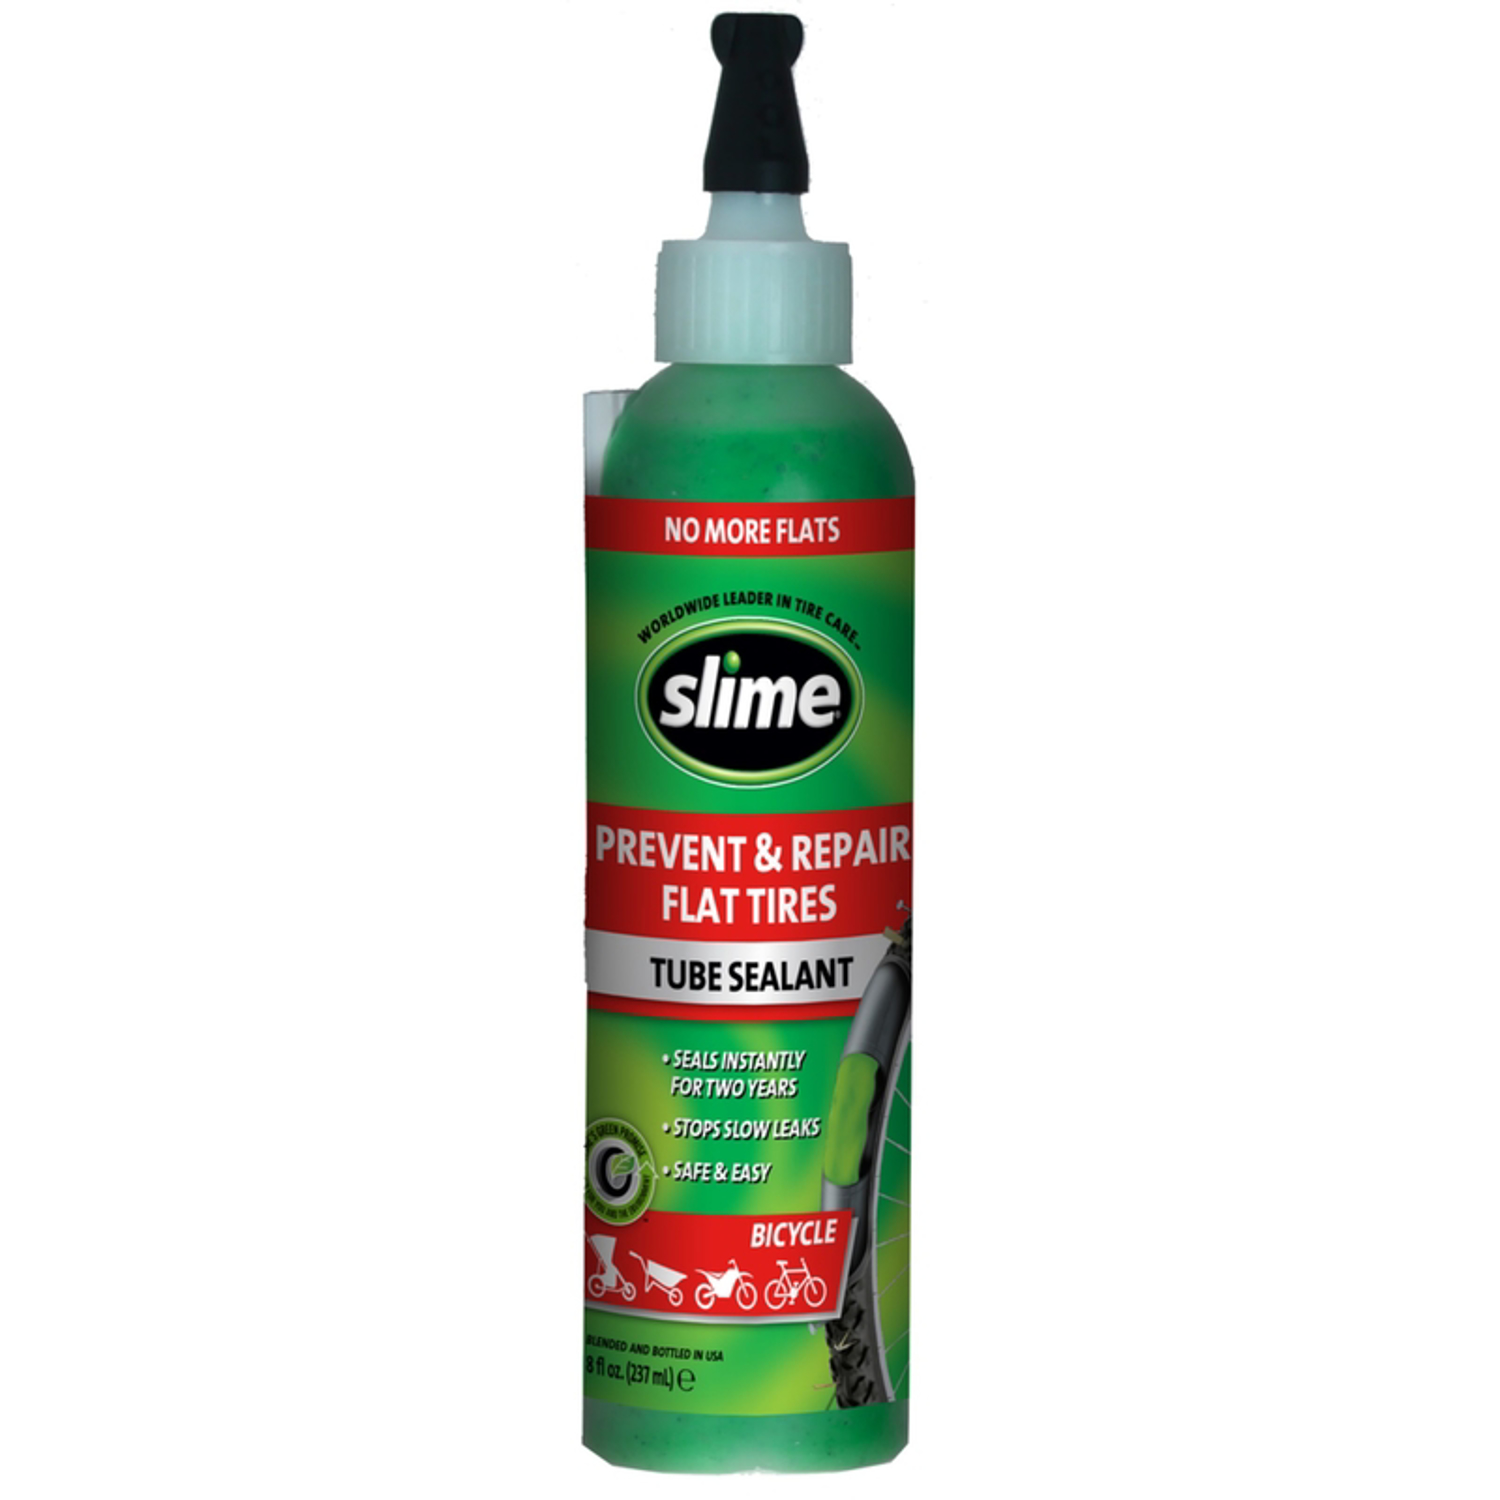 Photos - Other sporting goods Slime Tube Sealant 8 oz 10003 